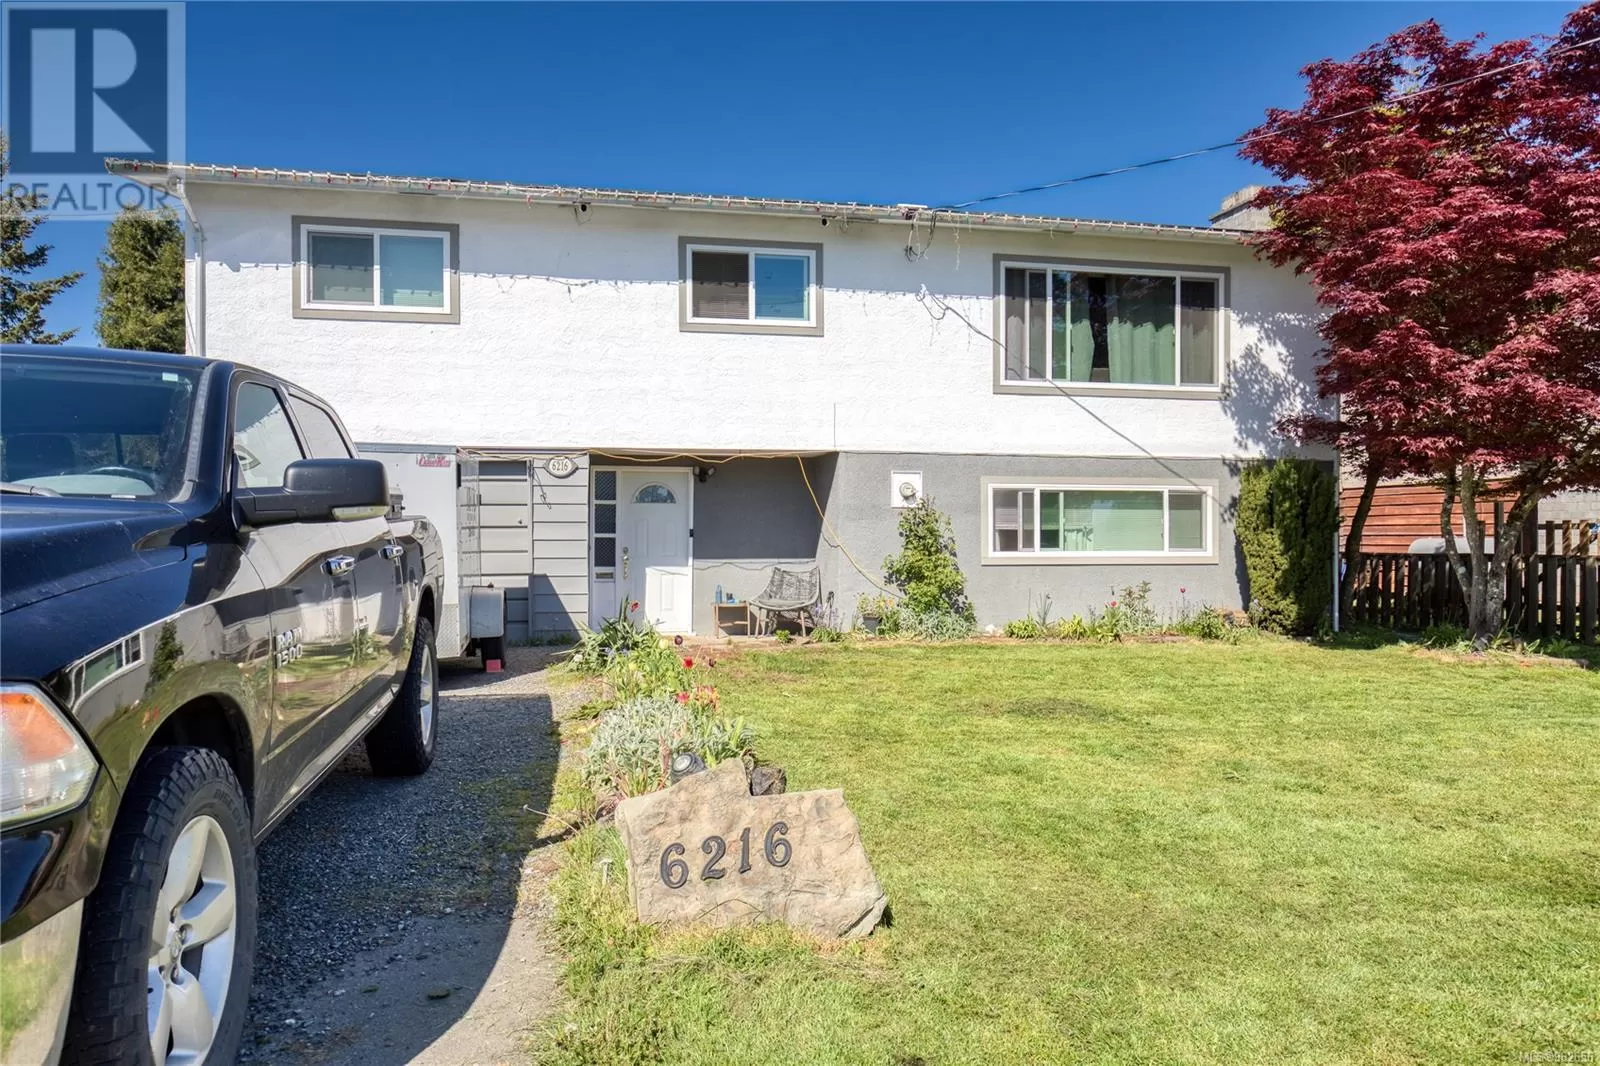 House for rent: 6216 Somenos Rd, Duncan, British Columbia V9L 4E8